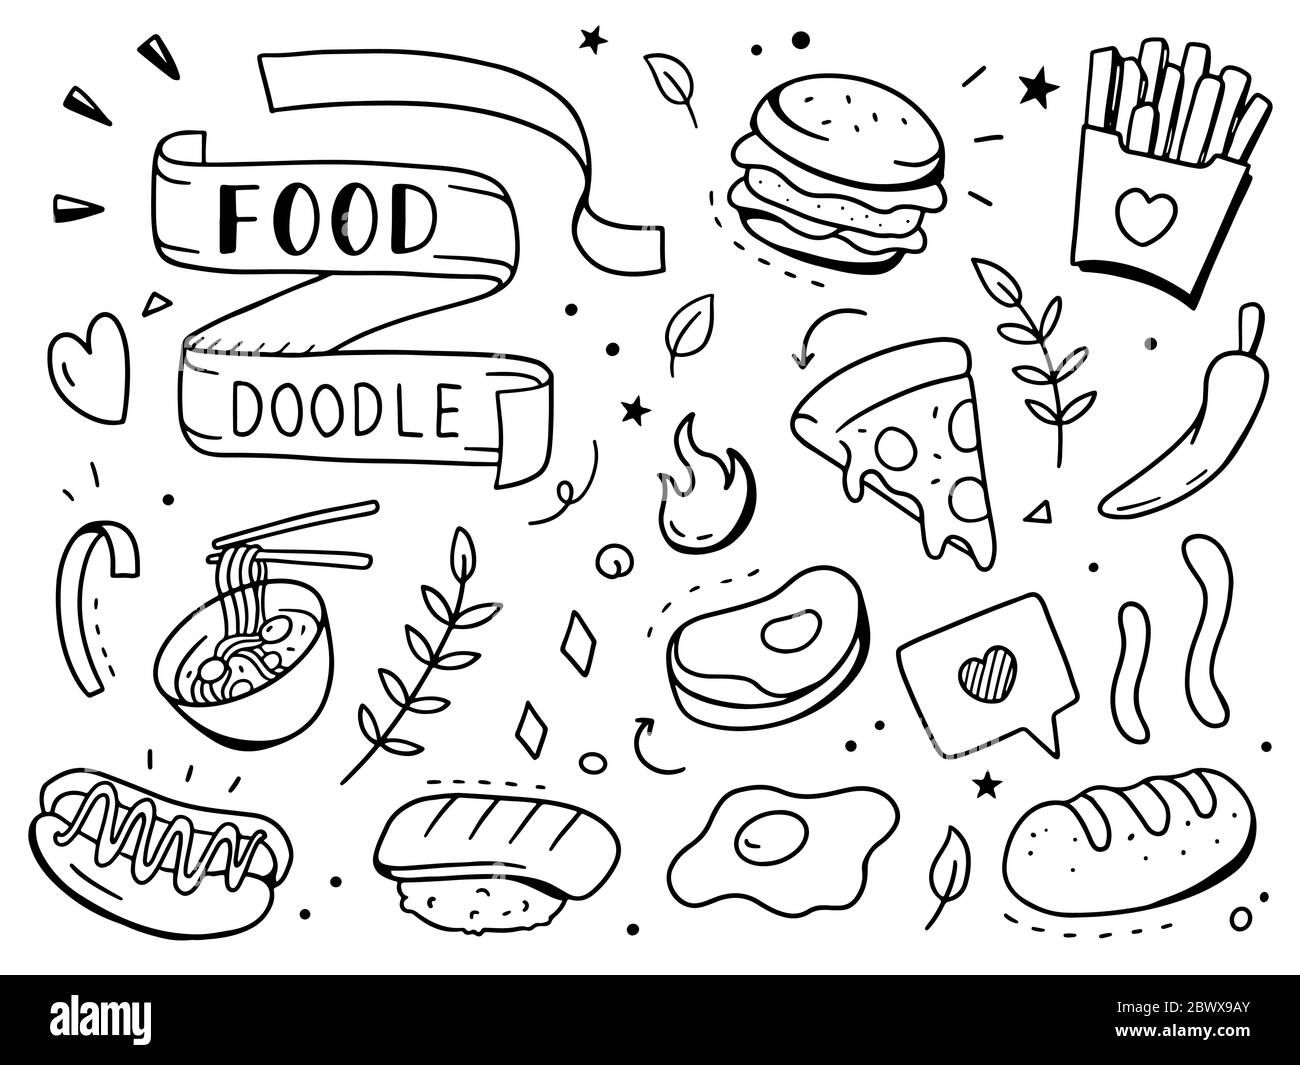 food doodle illustration. Doodle design concept Stock Vector